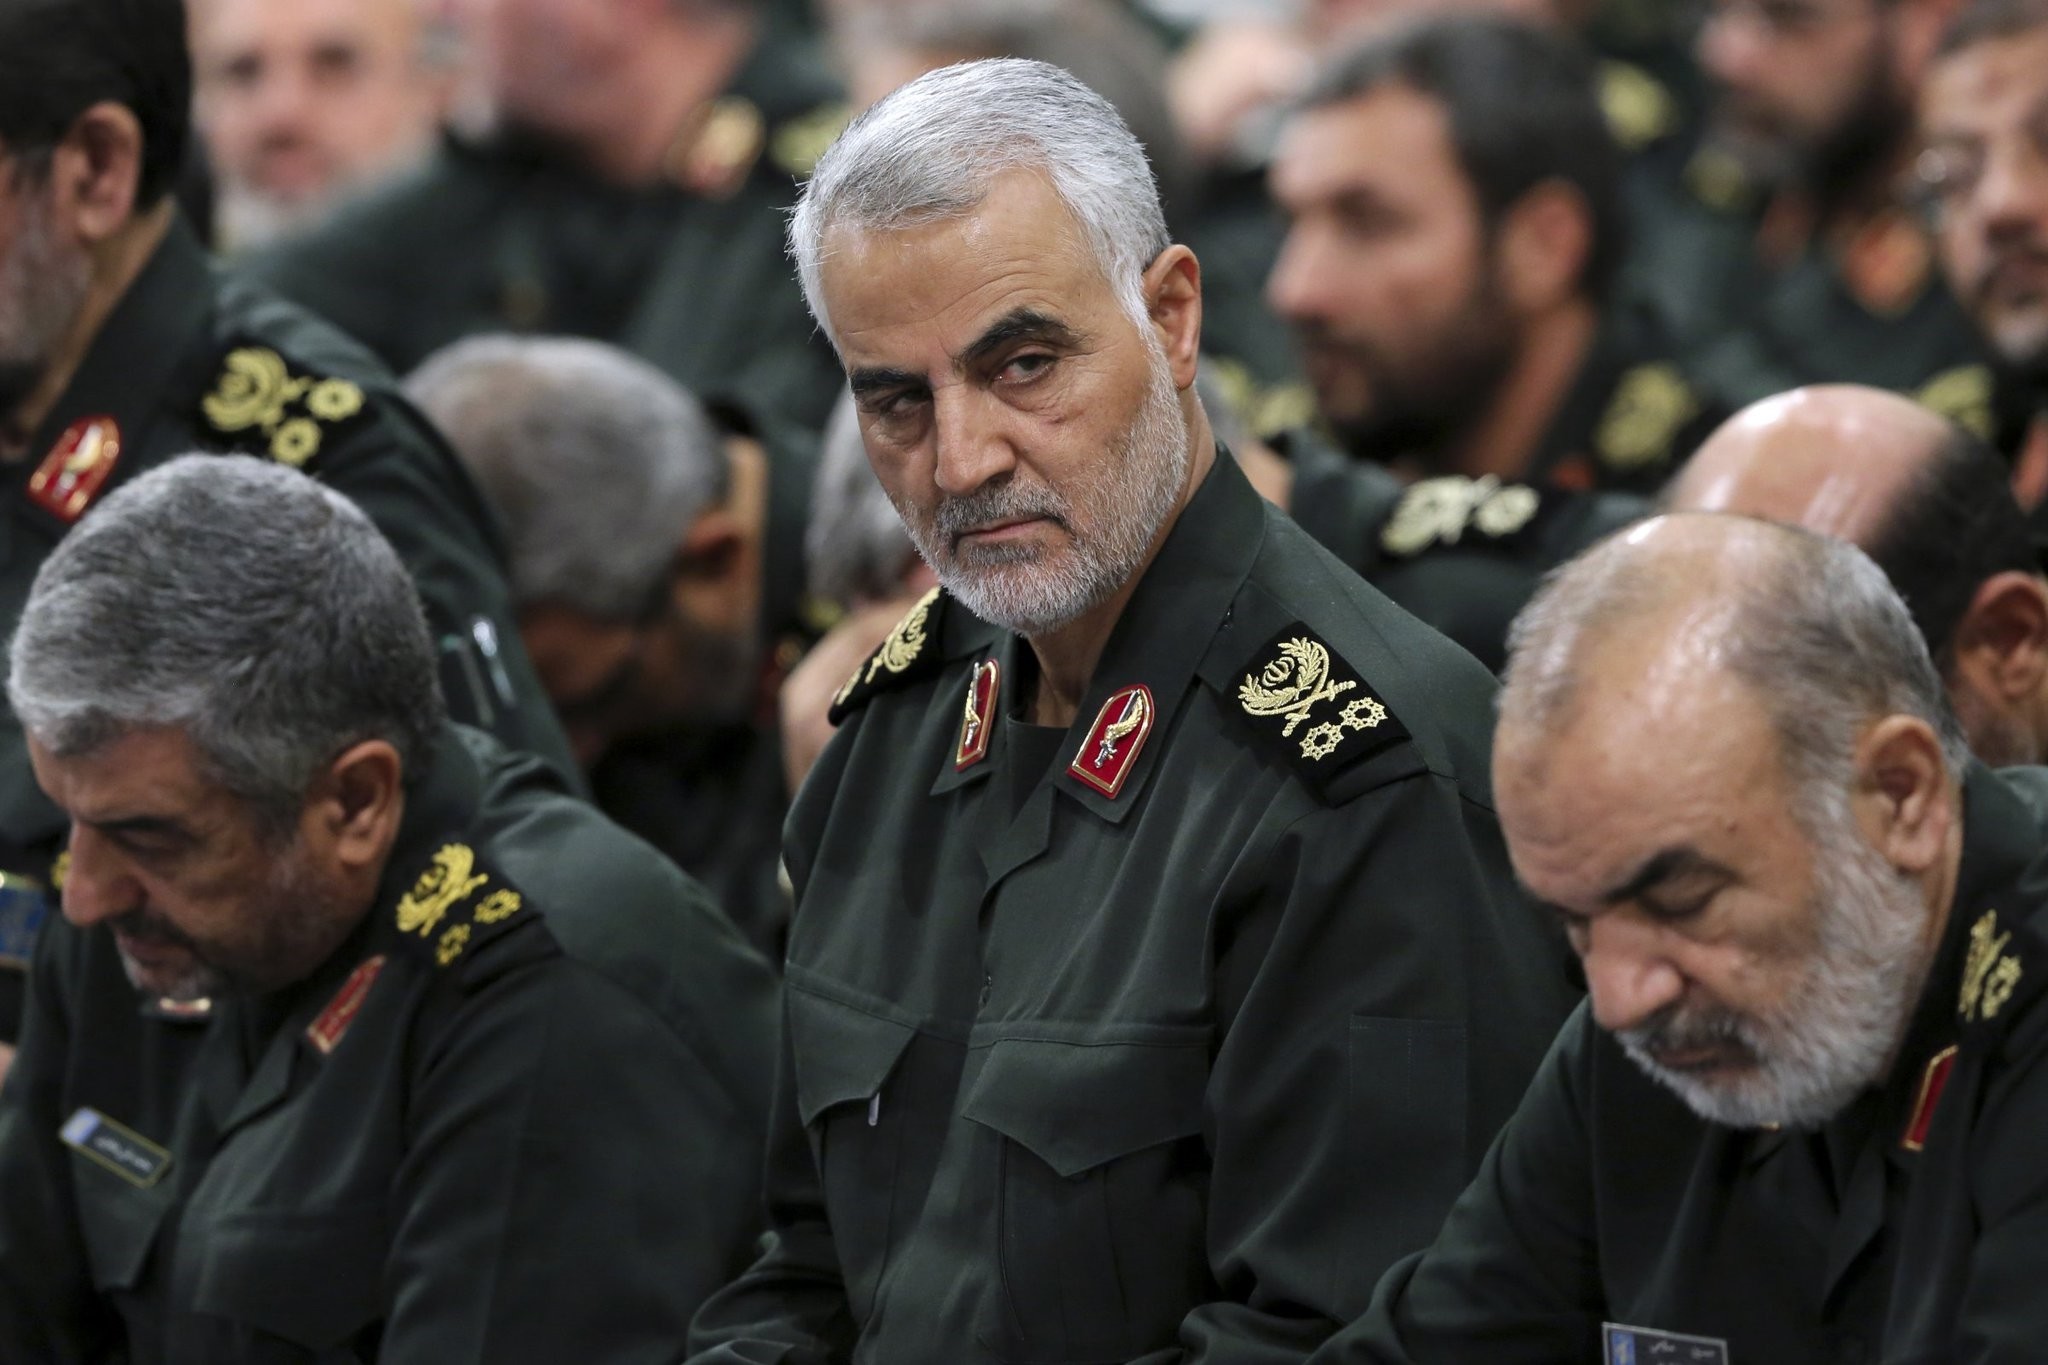 Revolutionary Guard Gen. Qassem Soleimani, center, attends a meeting with Supreme Leader Ayatollah Ali Khamenei and IRGC commanders in Tehran, September 18, 2016. (AP Photo)